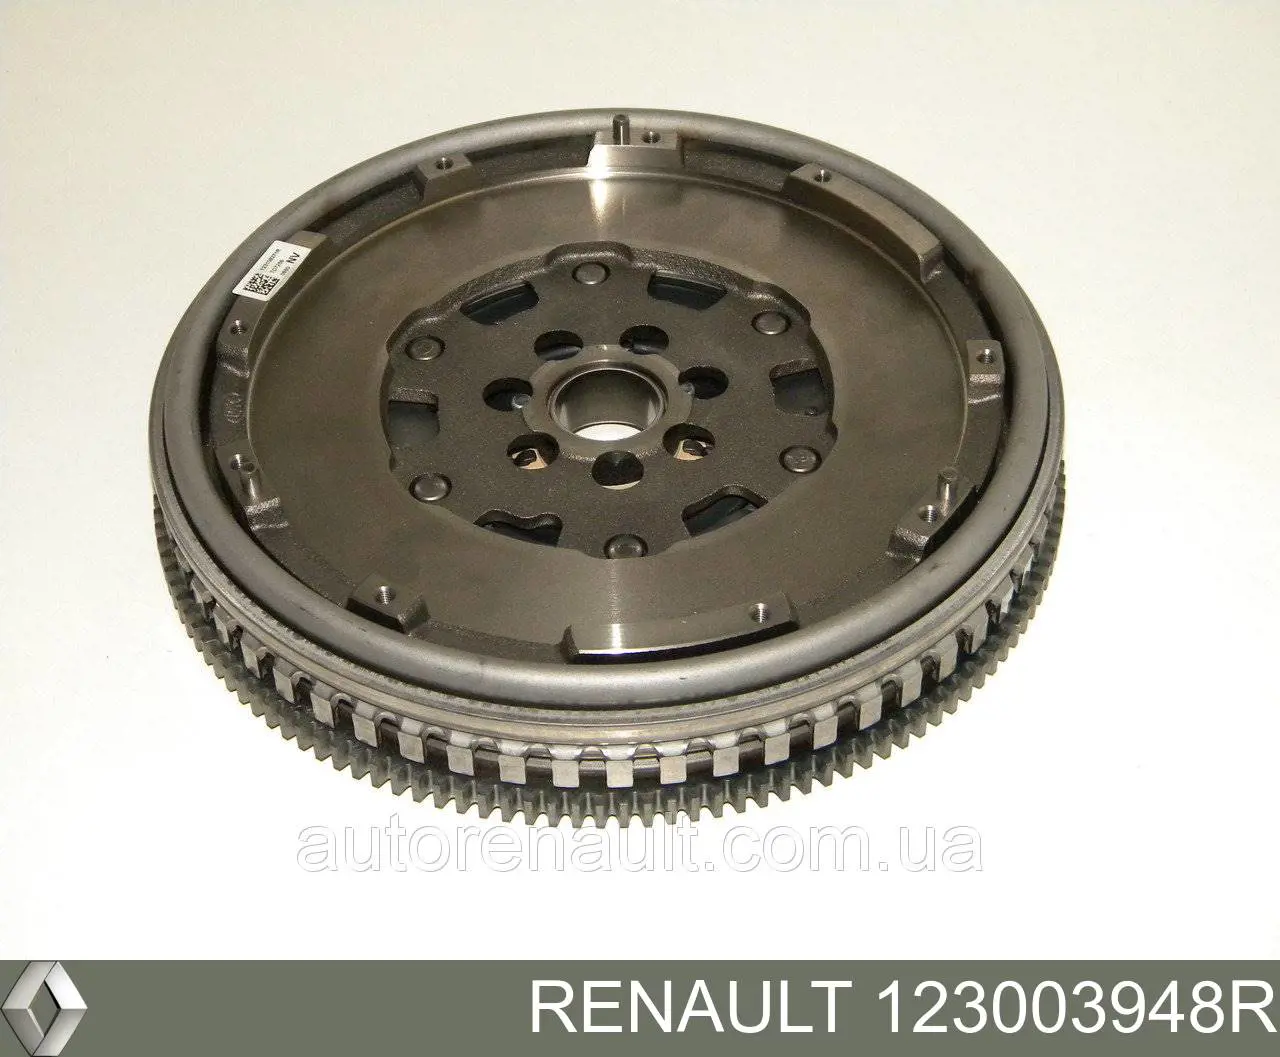 Маховик двигателя RENAULT 123003948R